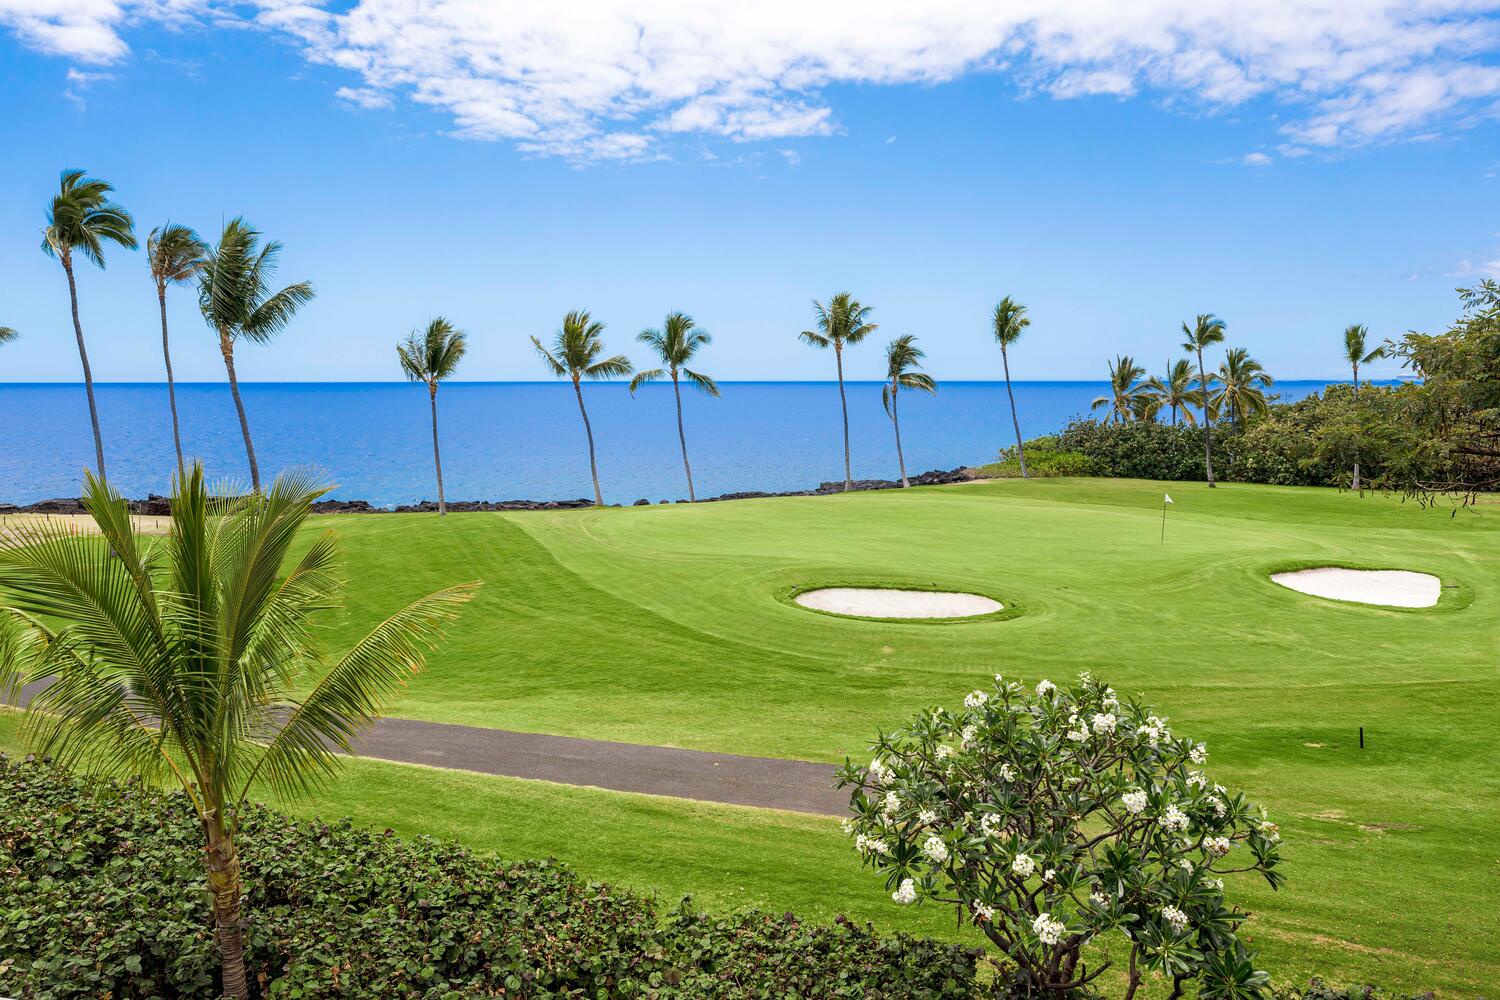 Kailua-Kona Vacation Rentals, Holua Kai #26 - Pristine golf course with lush greens and ocean views.